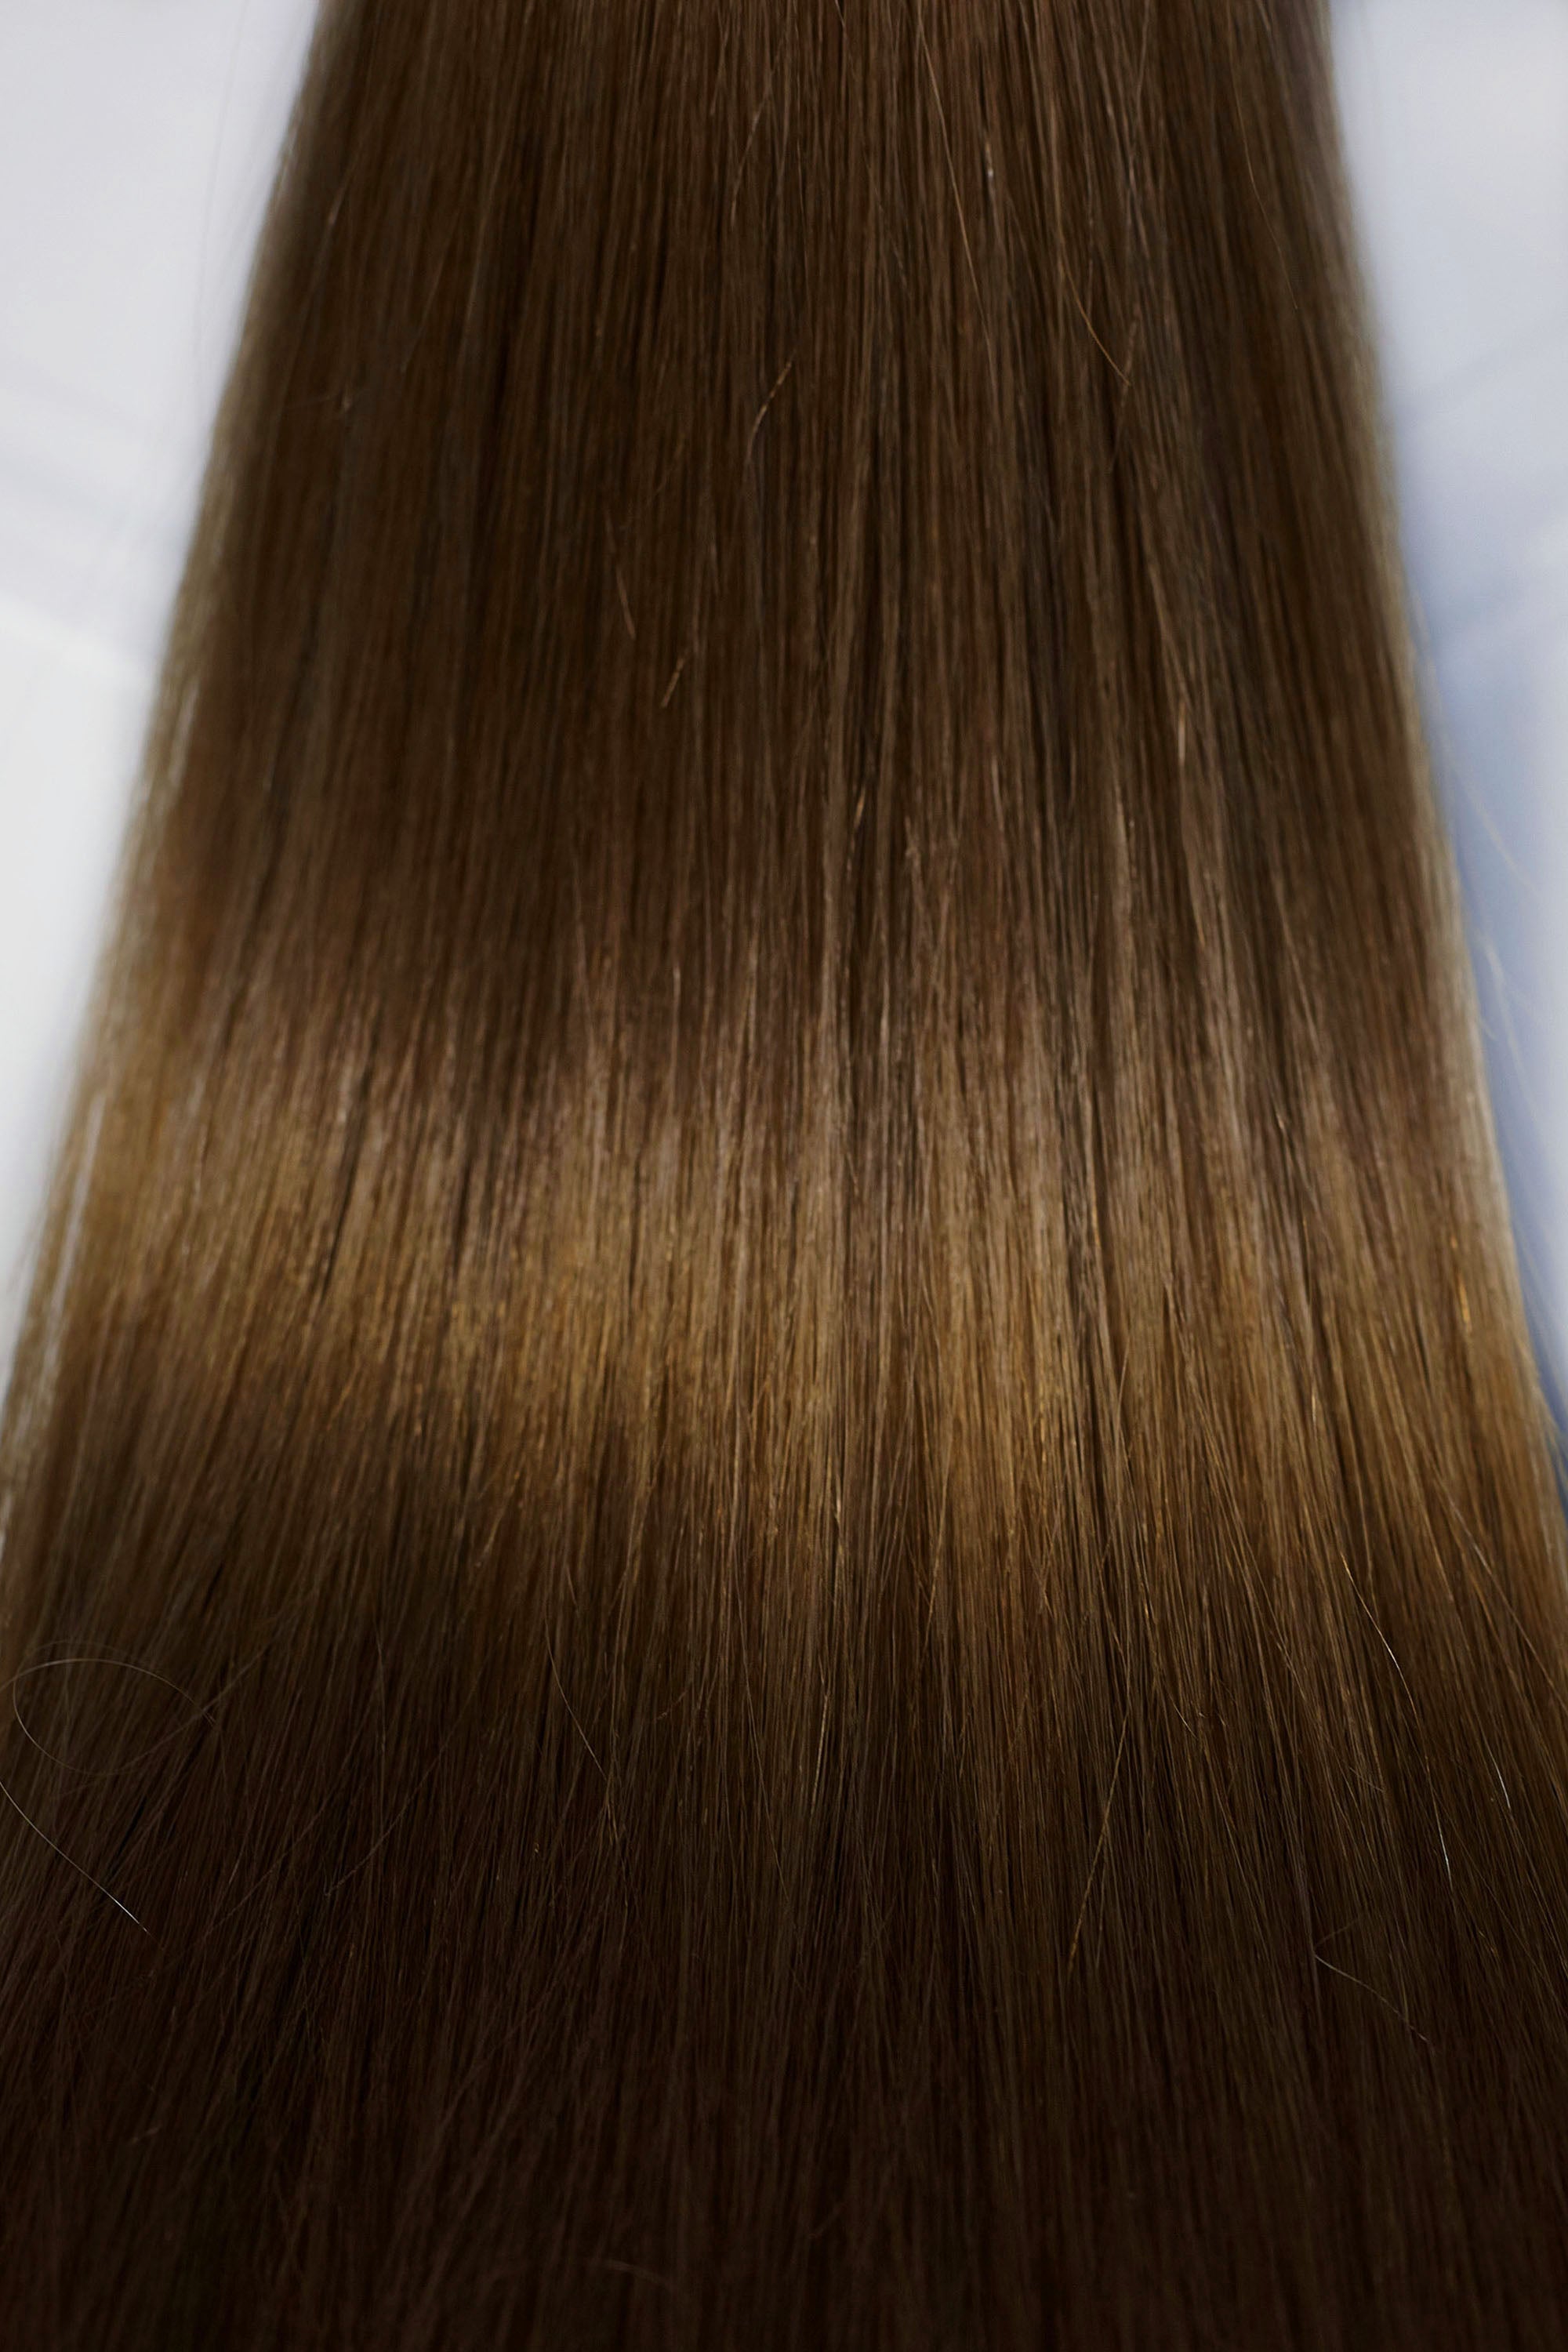 Behair professional Keratin Tip "Premium" 16" (40cm) Natural Straight Honey Walnut Brown #5 - 25g (Standart - 0.7g each pcs) hair extensions